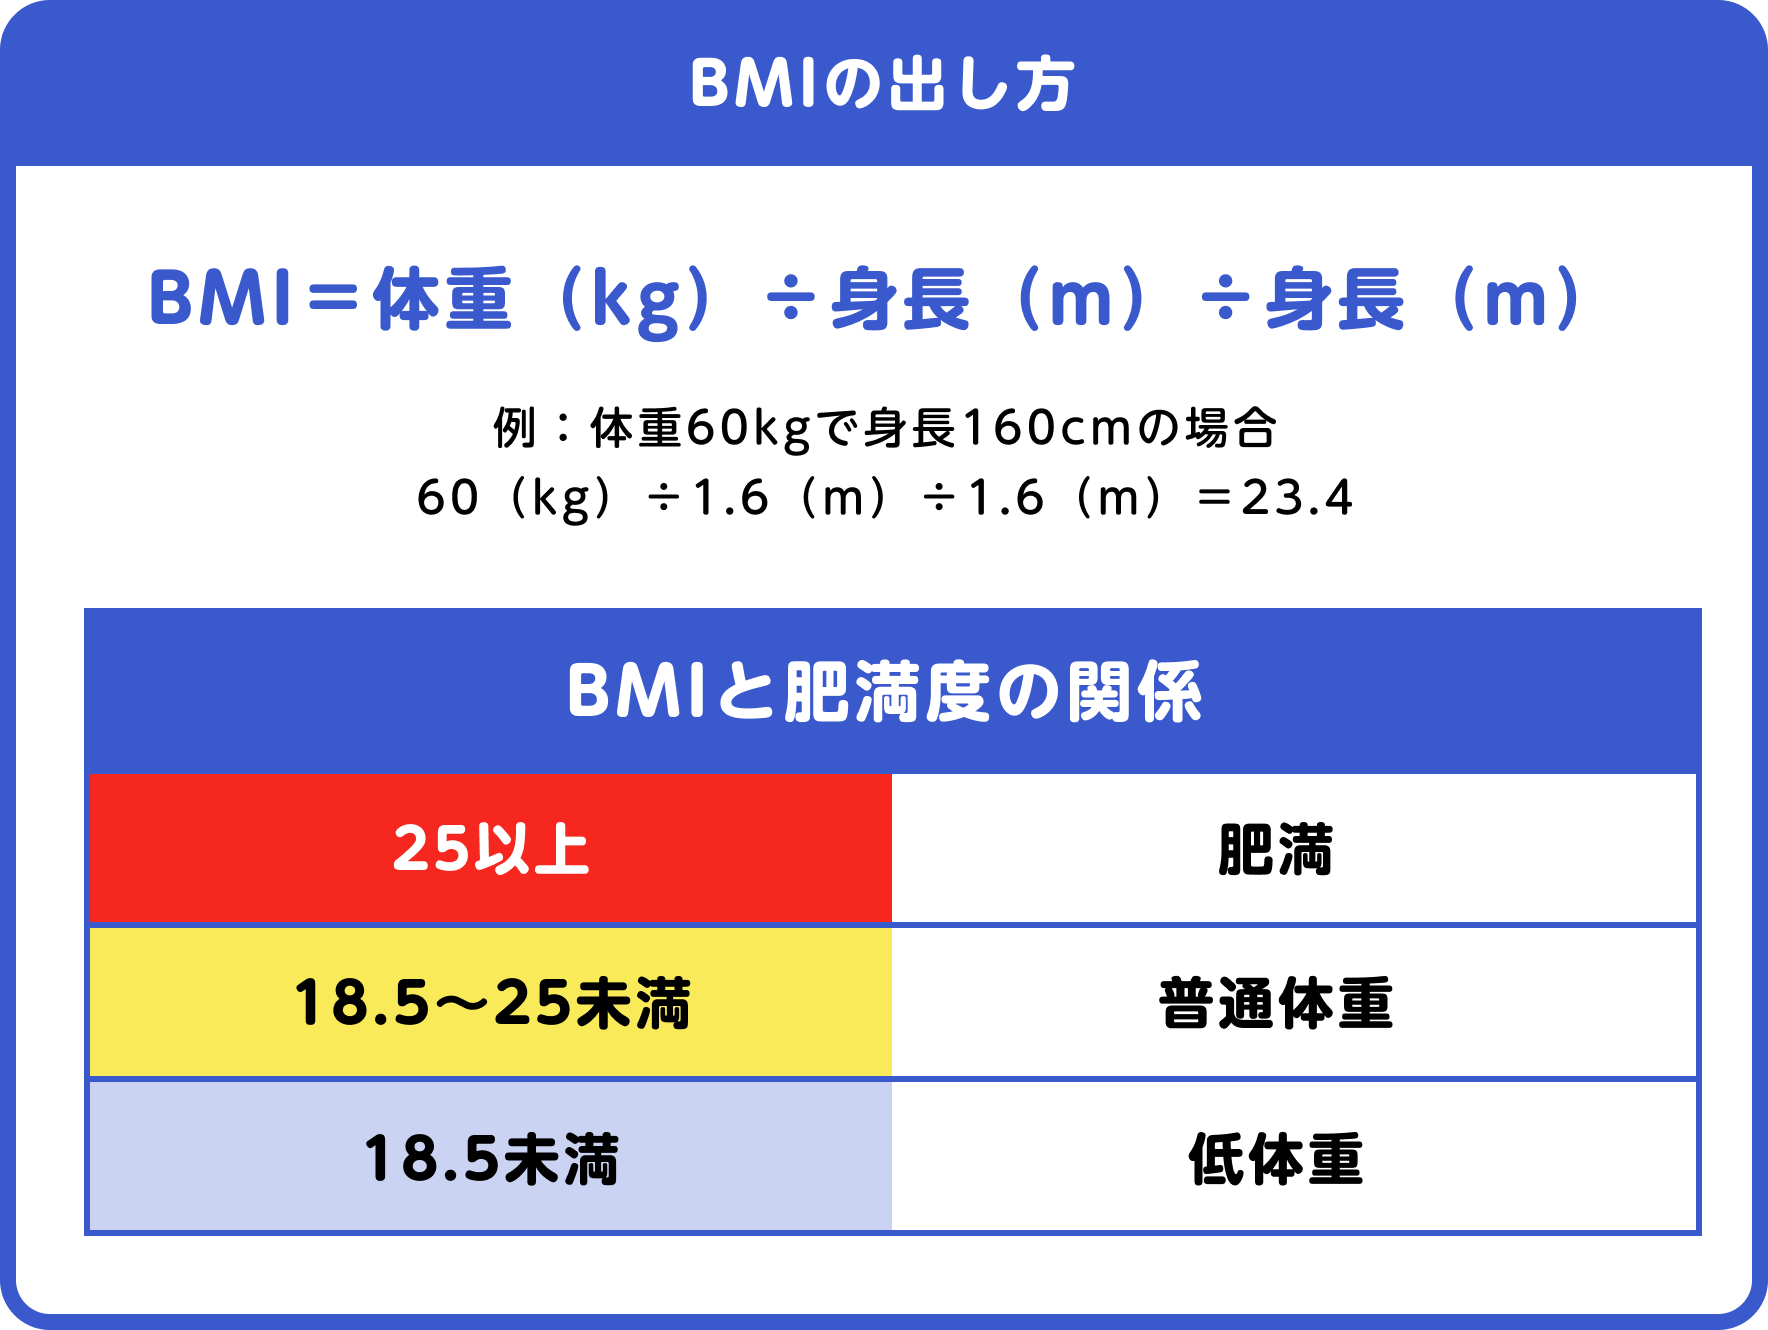 https://www.e-healthnet.mhlw.go.jp/information/dictionary/metabolic/ym-002.html